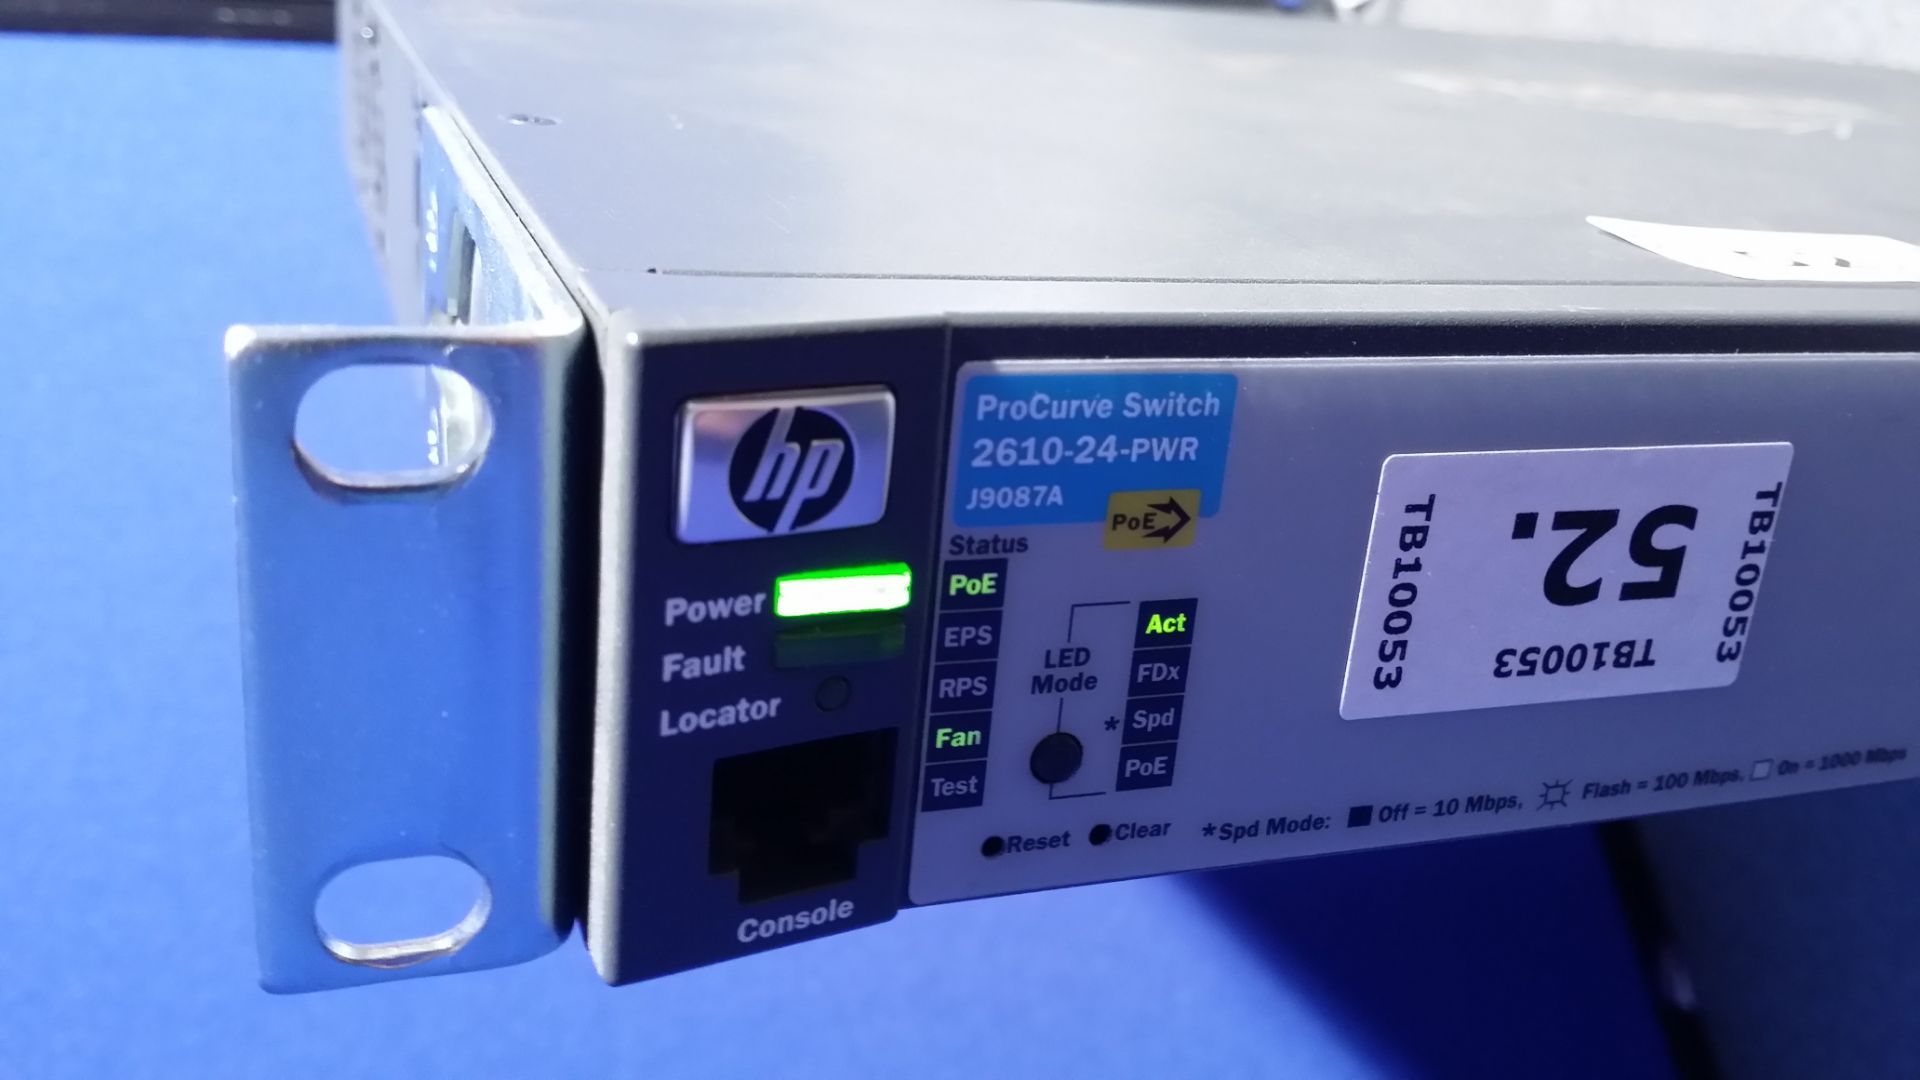 HP J9087A 24 Port 10/100 PoE Switch - 1U Rackmount - Powers On - Image 2 of 2